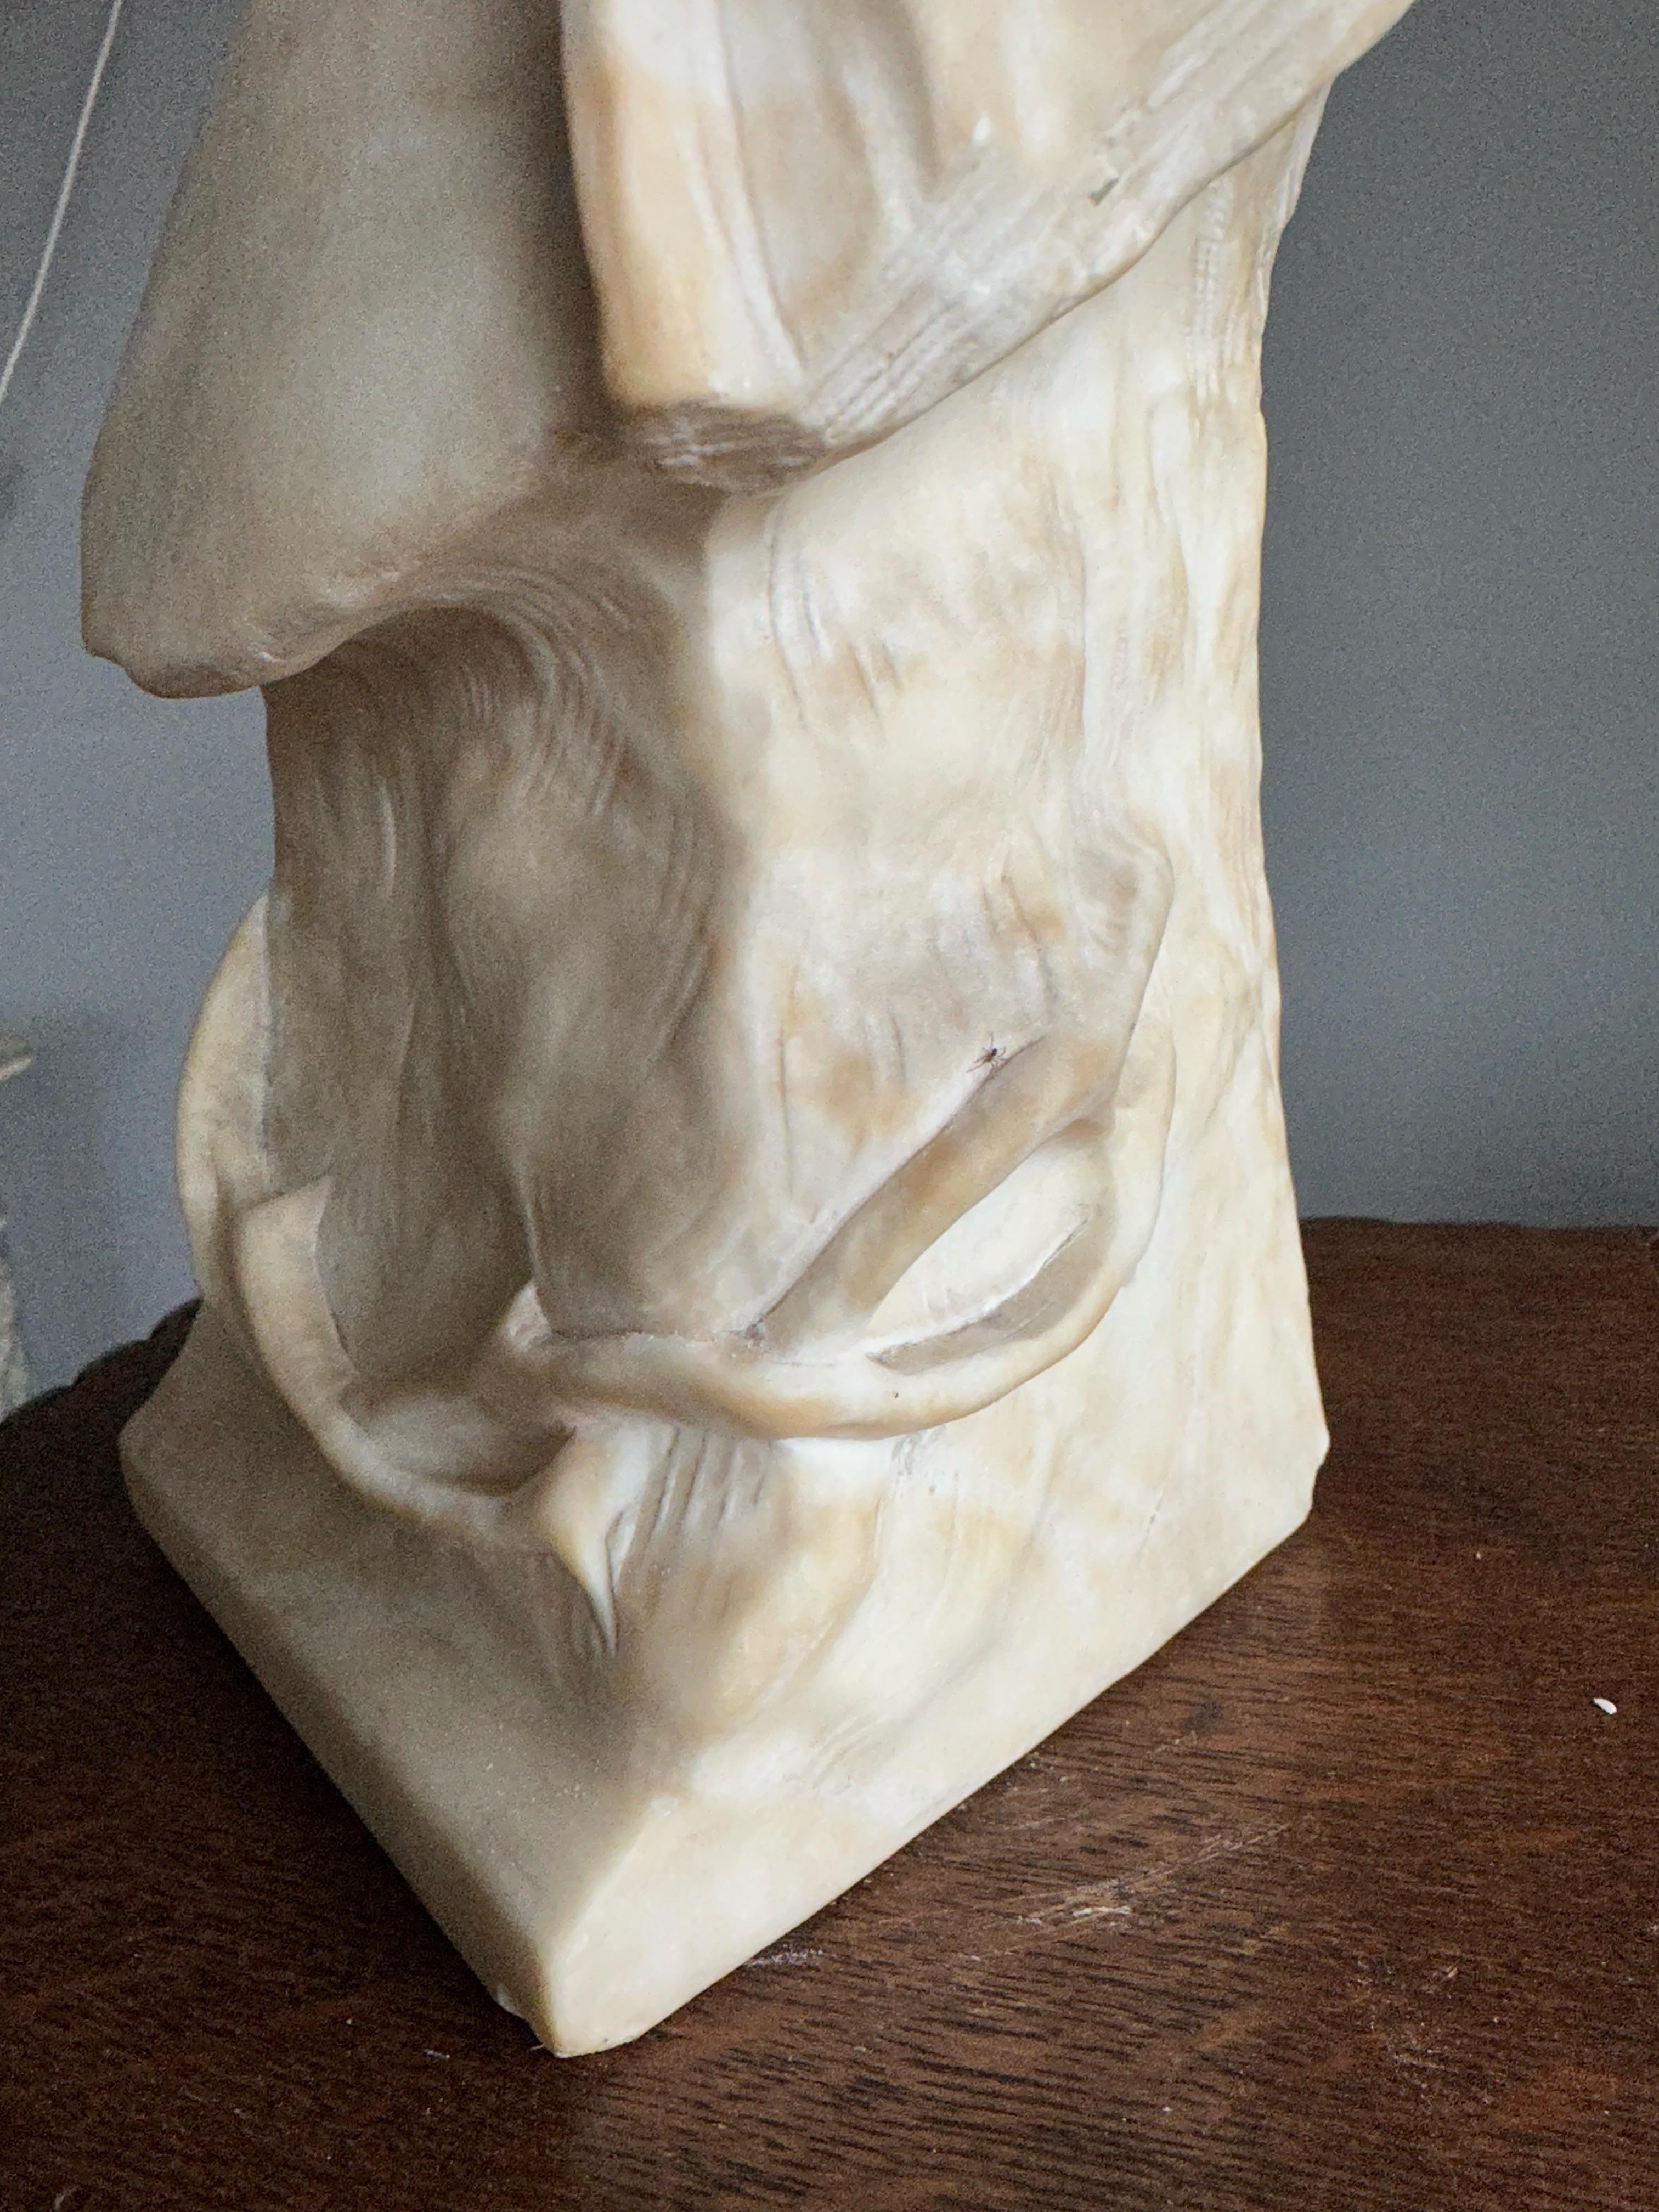 Antique, Early 1900 Large Hand Carved Alabaster Sculpture / Bust of Jesus Christ For Sale 4